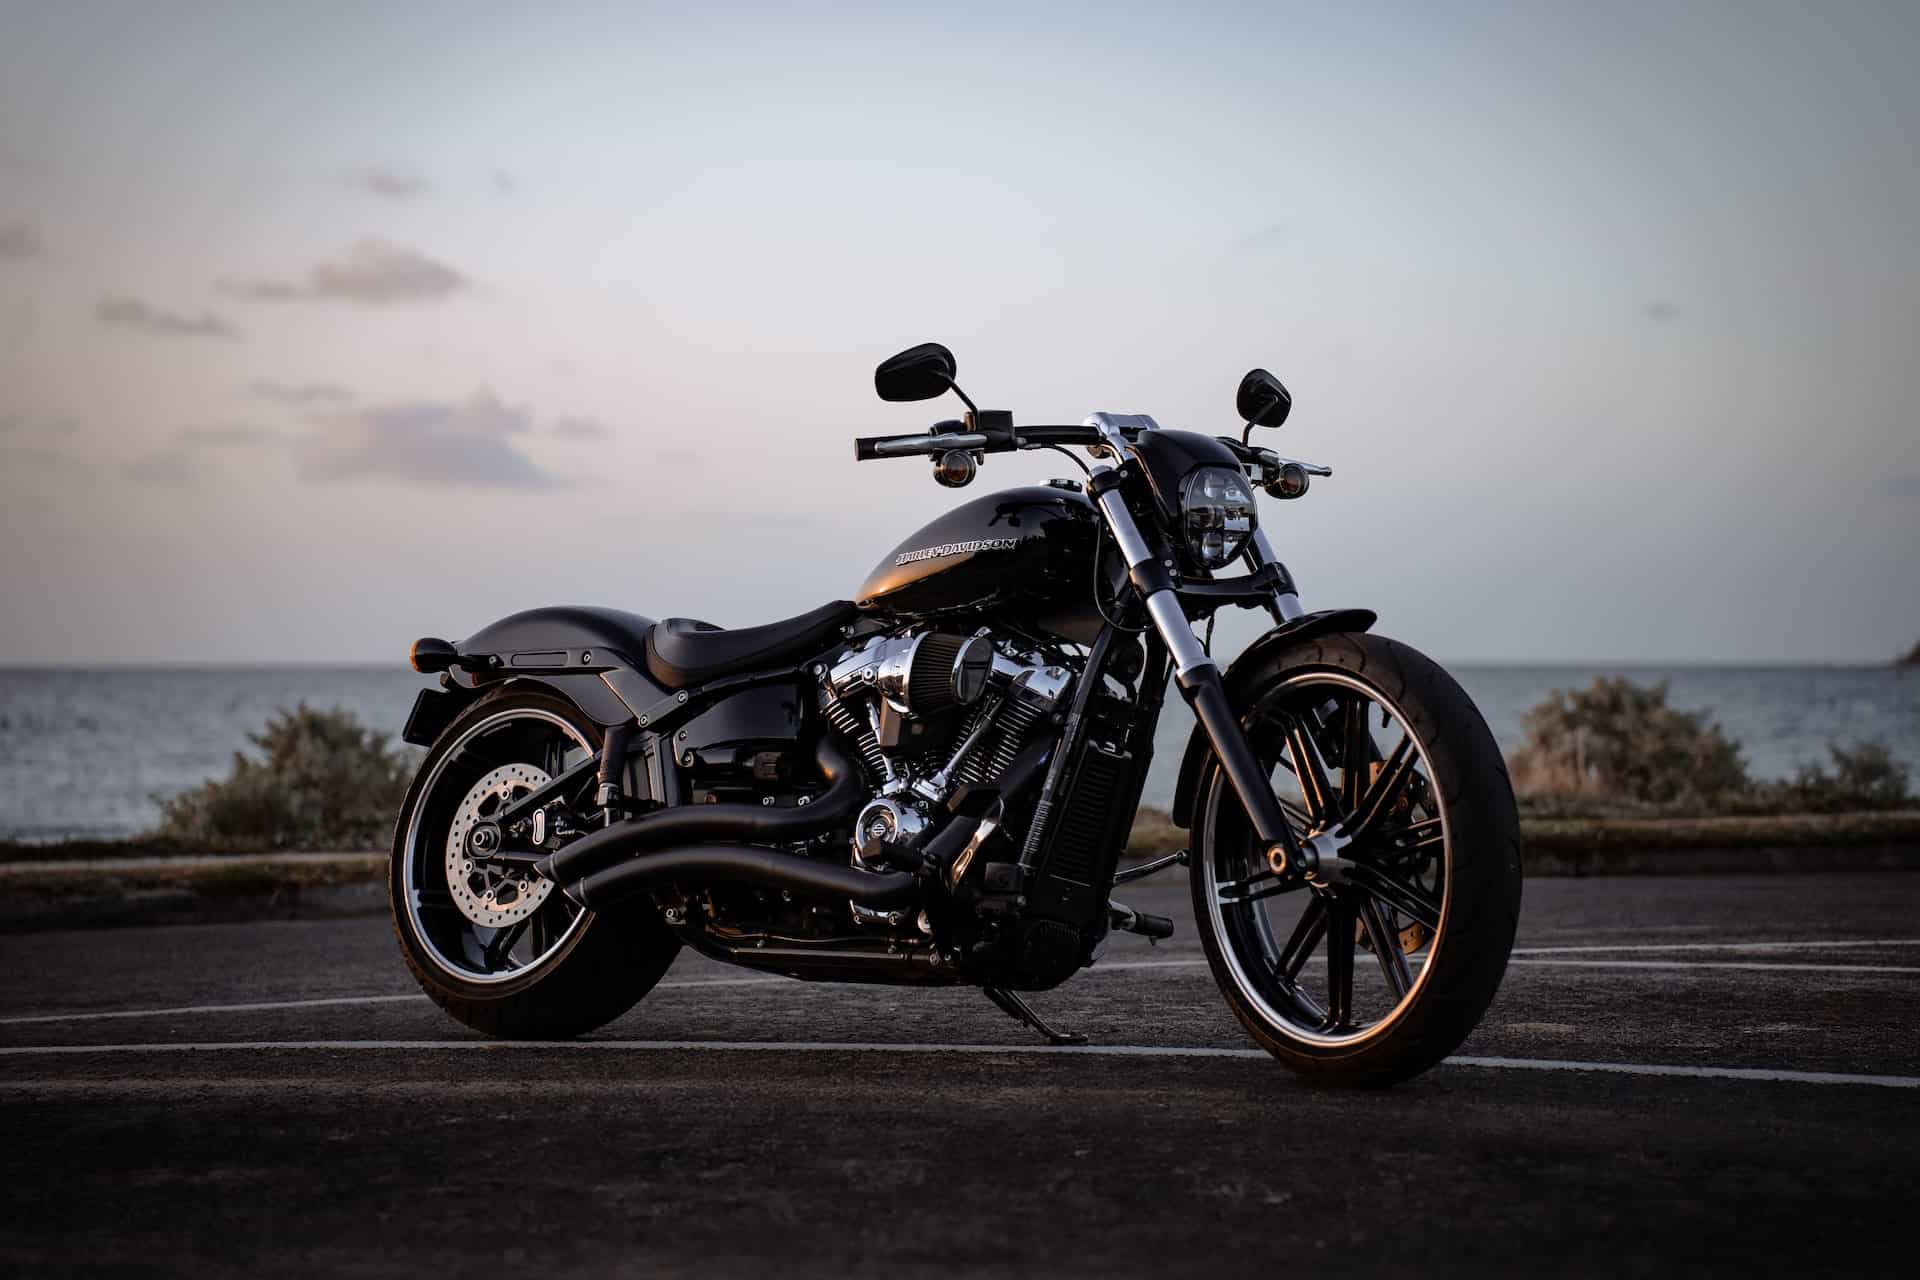 Harley Davidson Starter Problems Troubleshooting - Harley Davidson Motorcycle